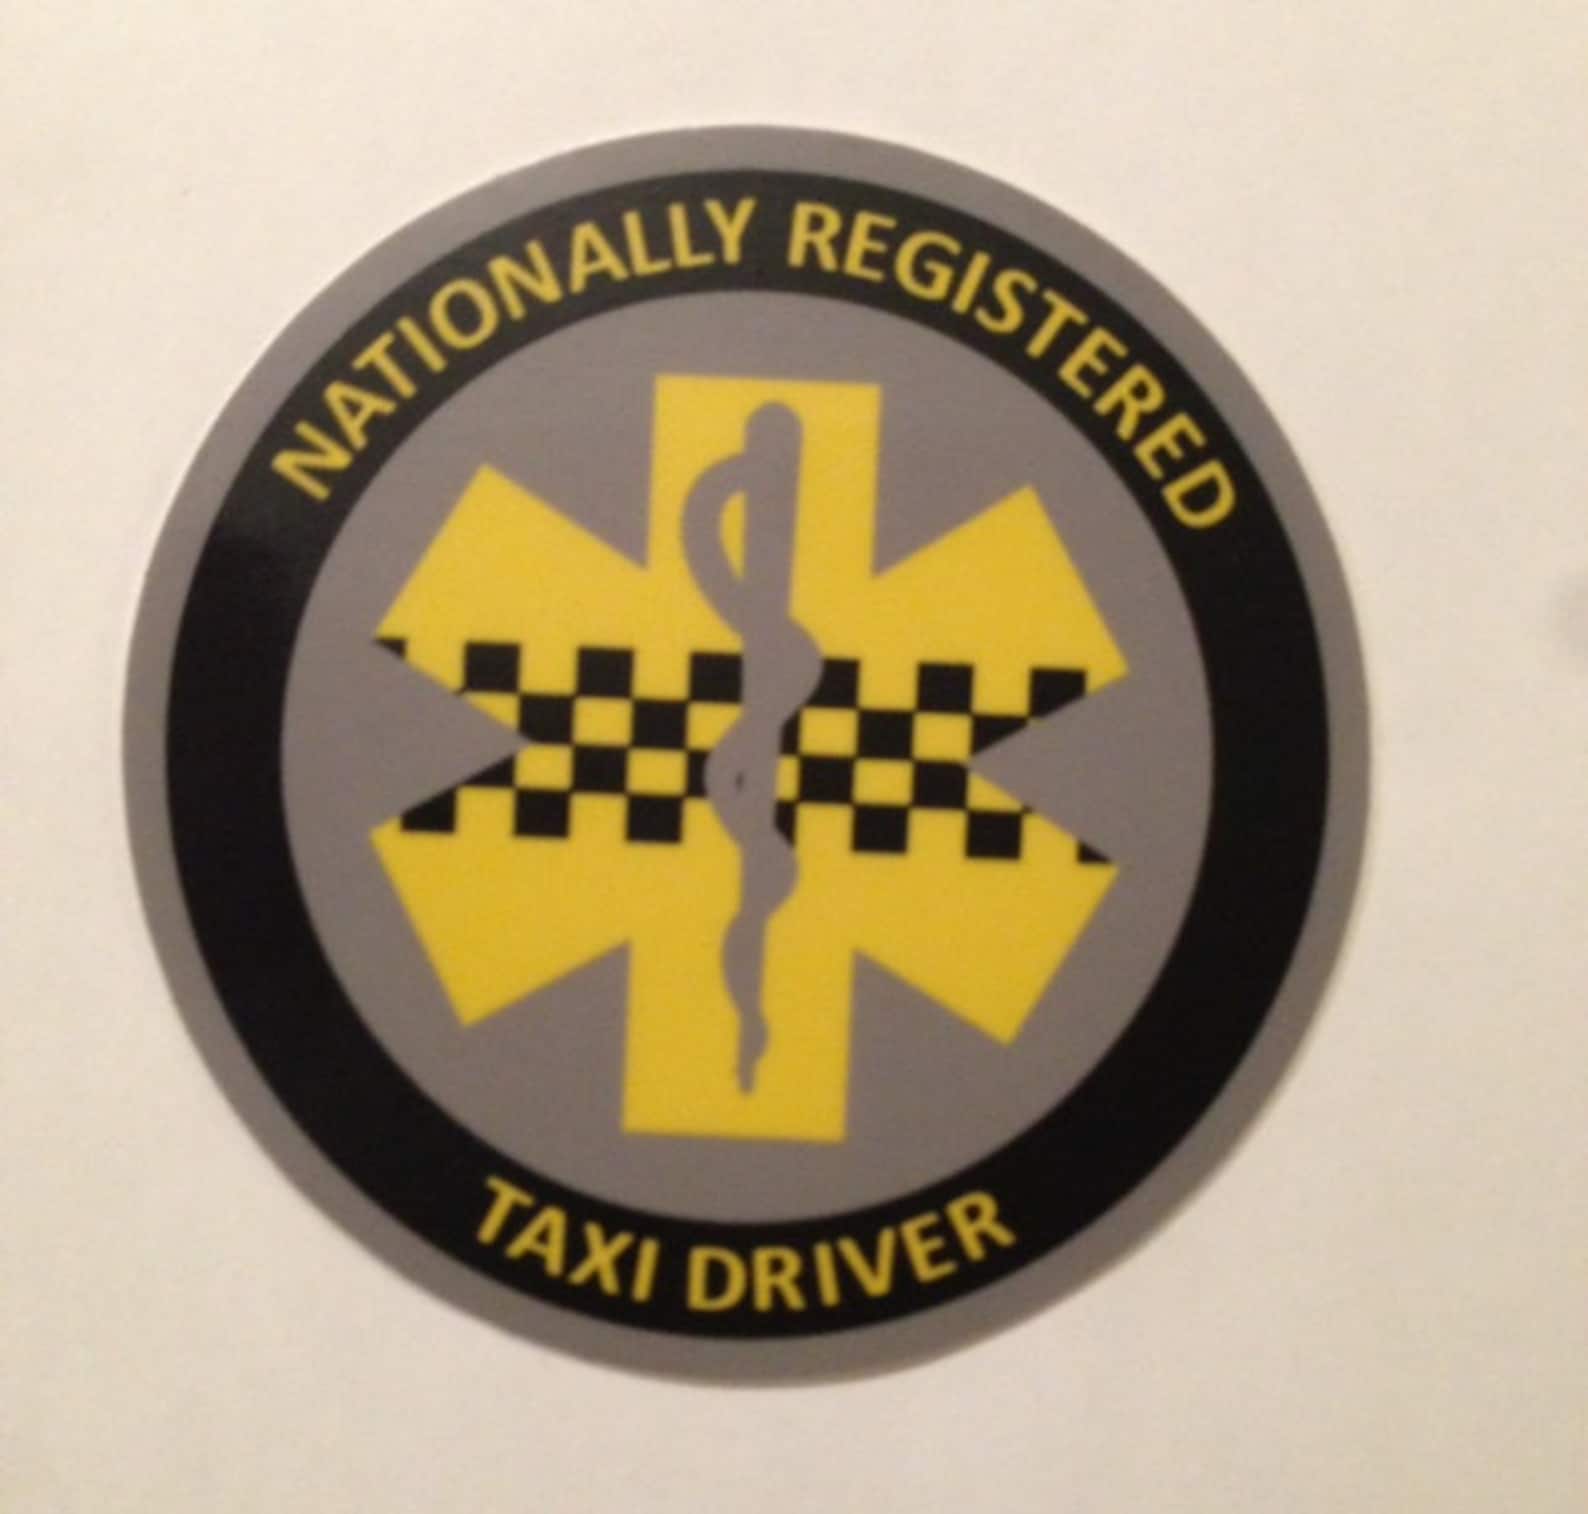 Nationally Registered Taxi Driver Vinyl Sticker Etsy